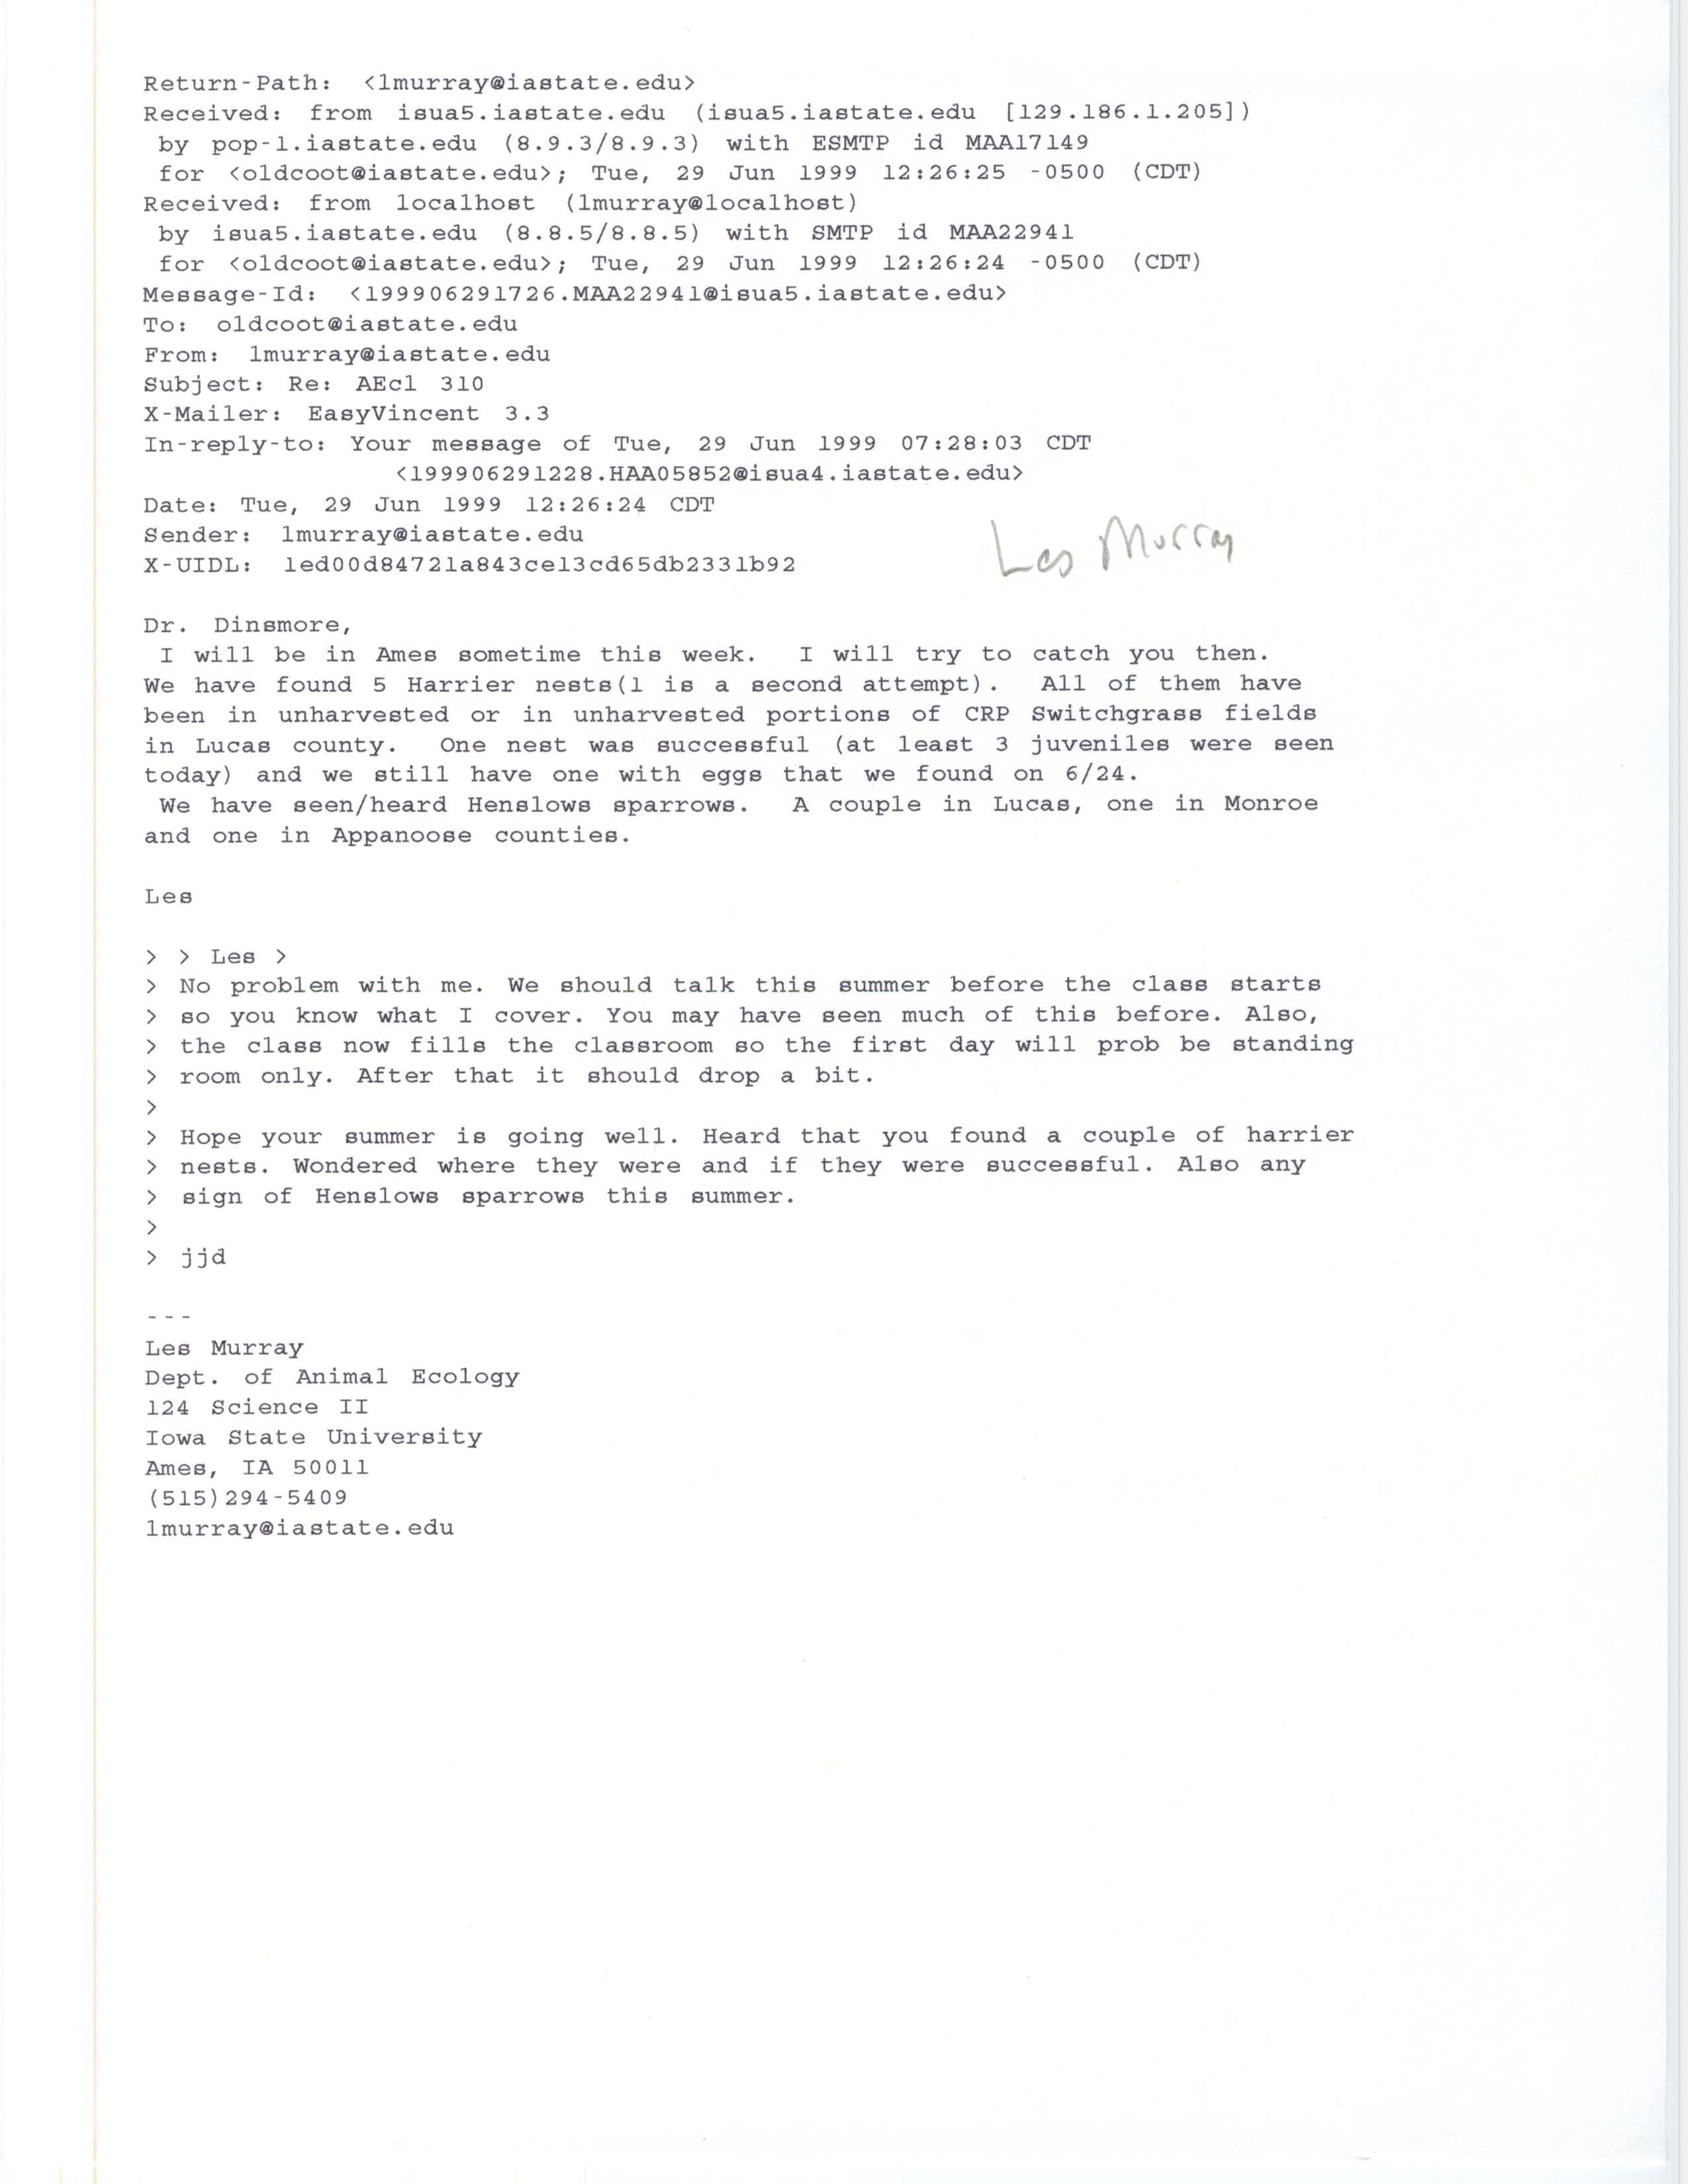 Les Murray email to Jim Dinsmore regarding Harrier nests, June 29, 1999 